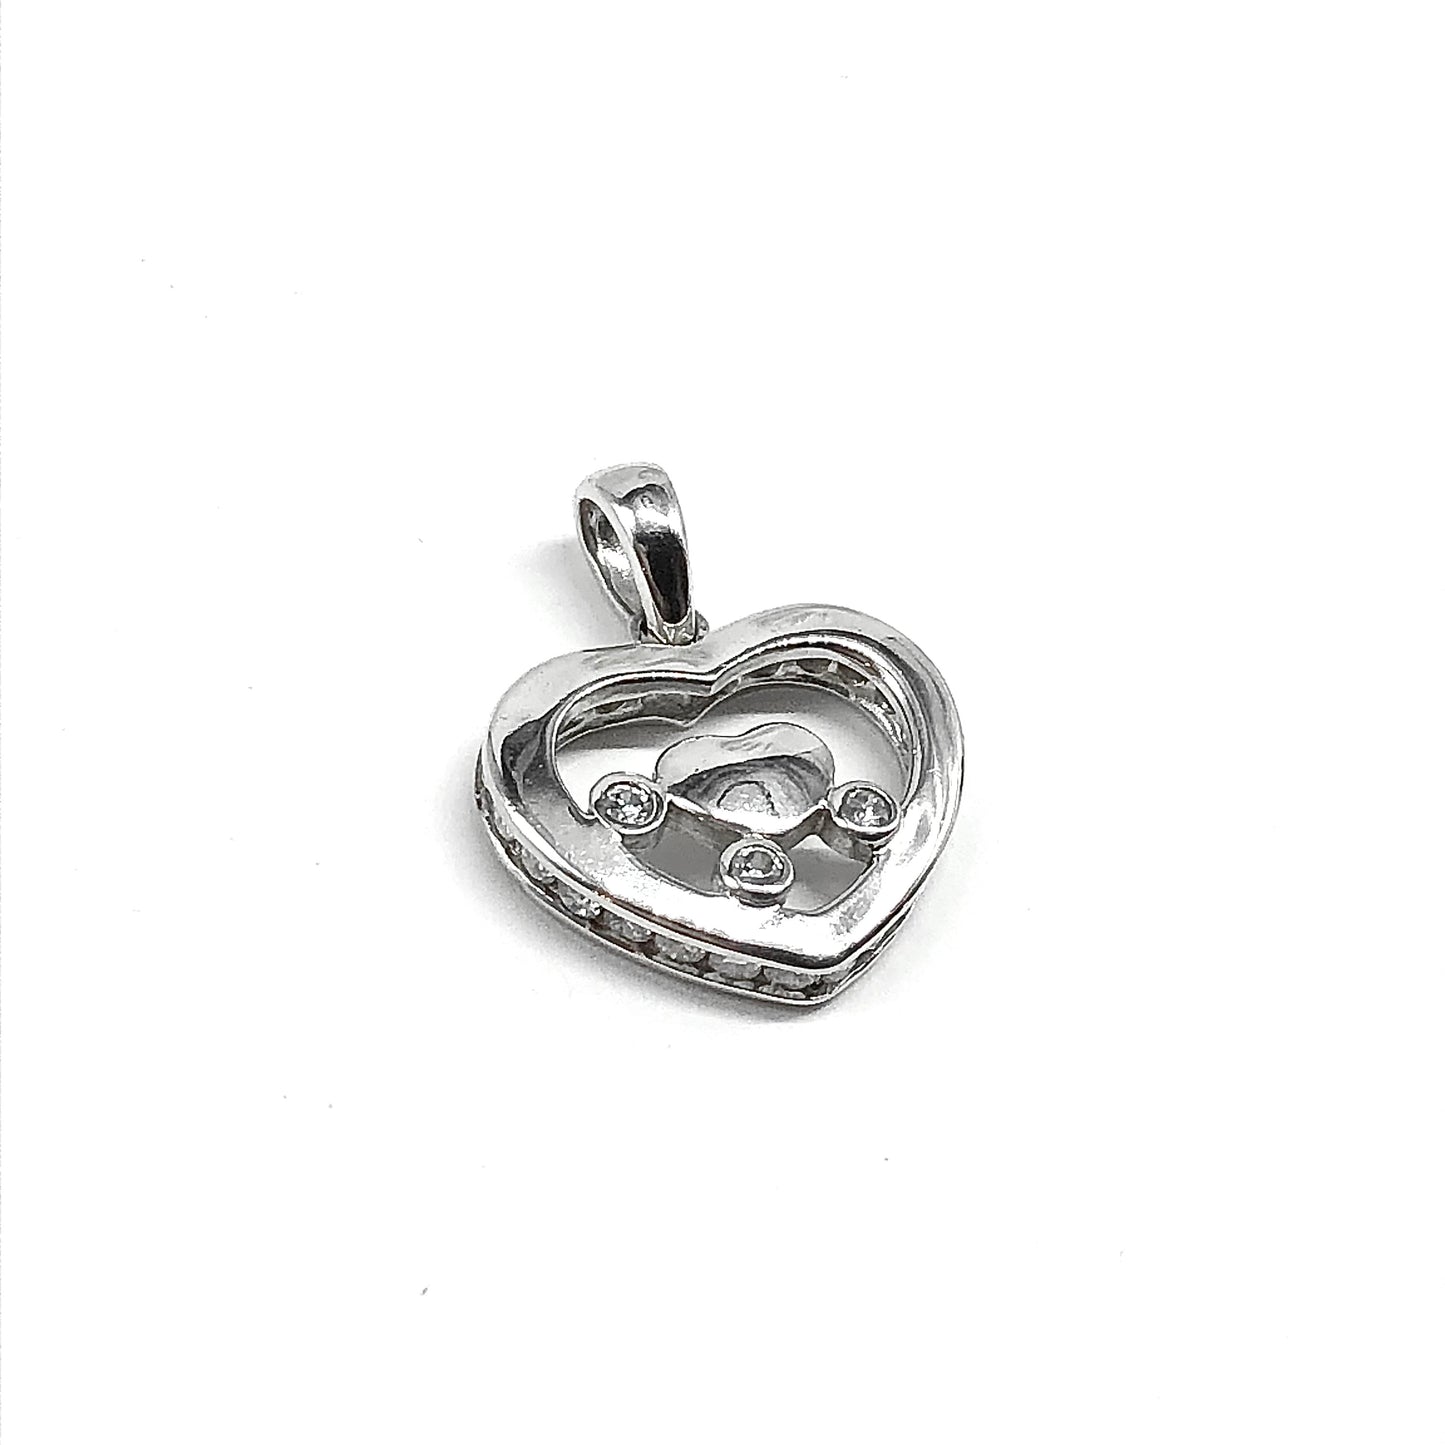 Blingschlingers Jewelry - Heart Pendant, Women's White Cubic Zirconia Stone Heart Design Sterling Silver Pendant